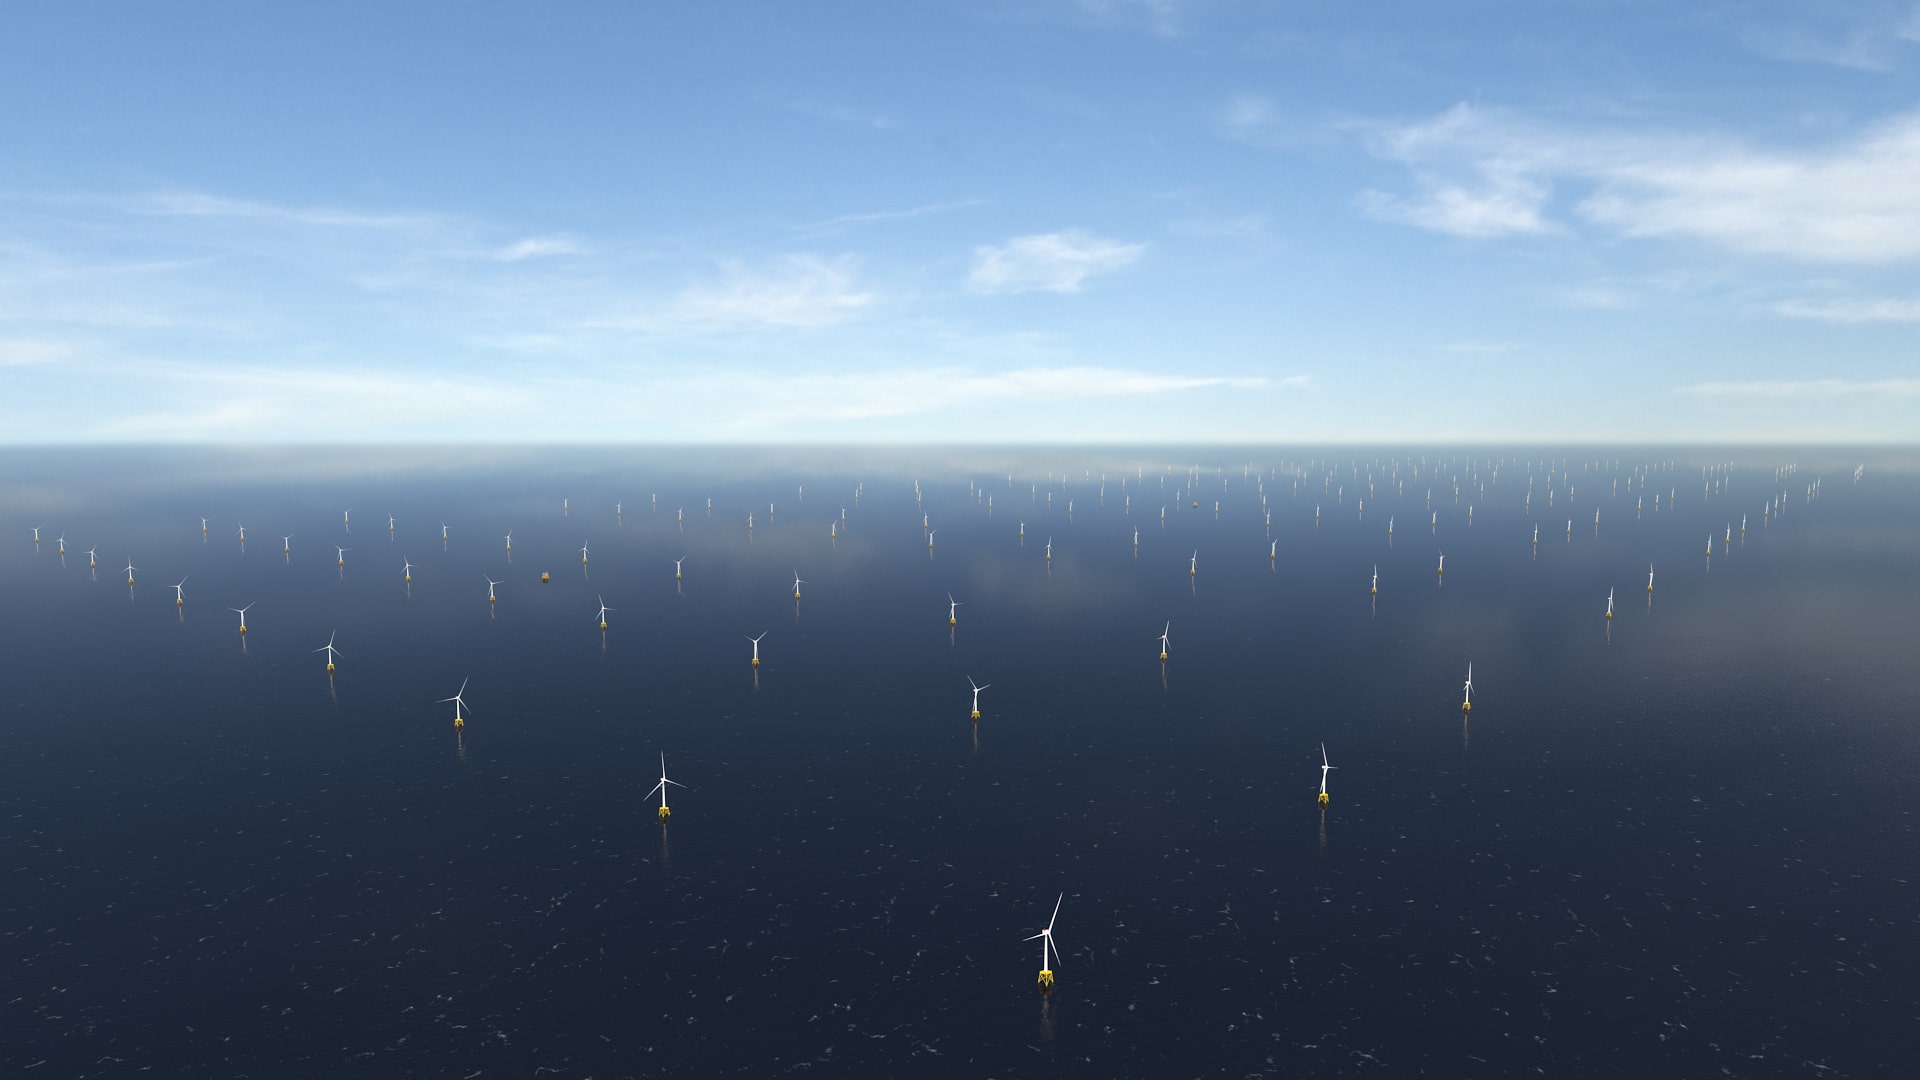 Australia Offshore wind farm - Mainstream Renewable Power announces application for 2.5 GW offshore wind development in Gippsland, Australia